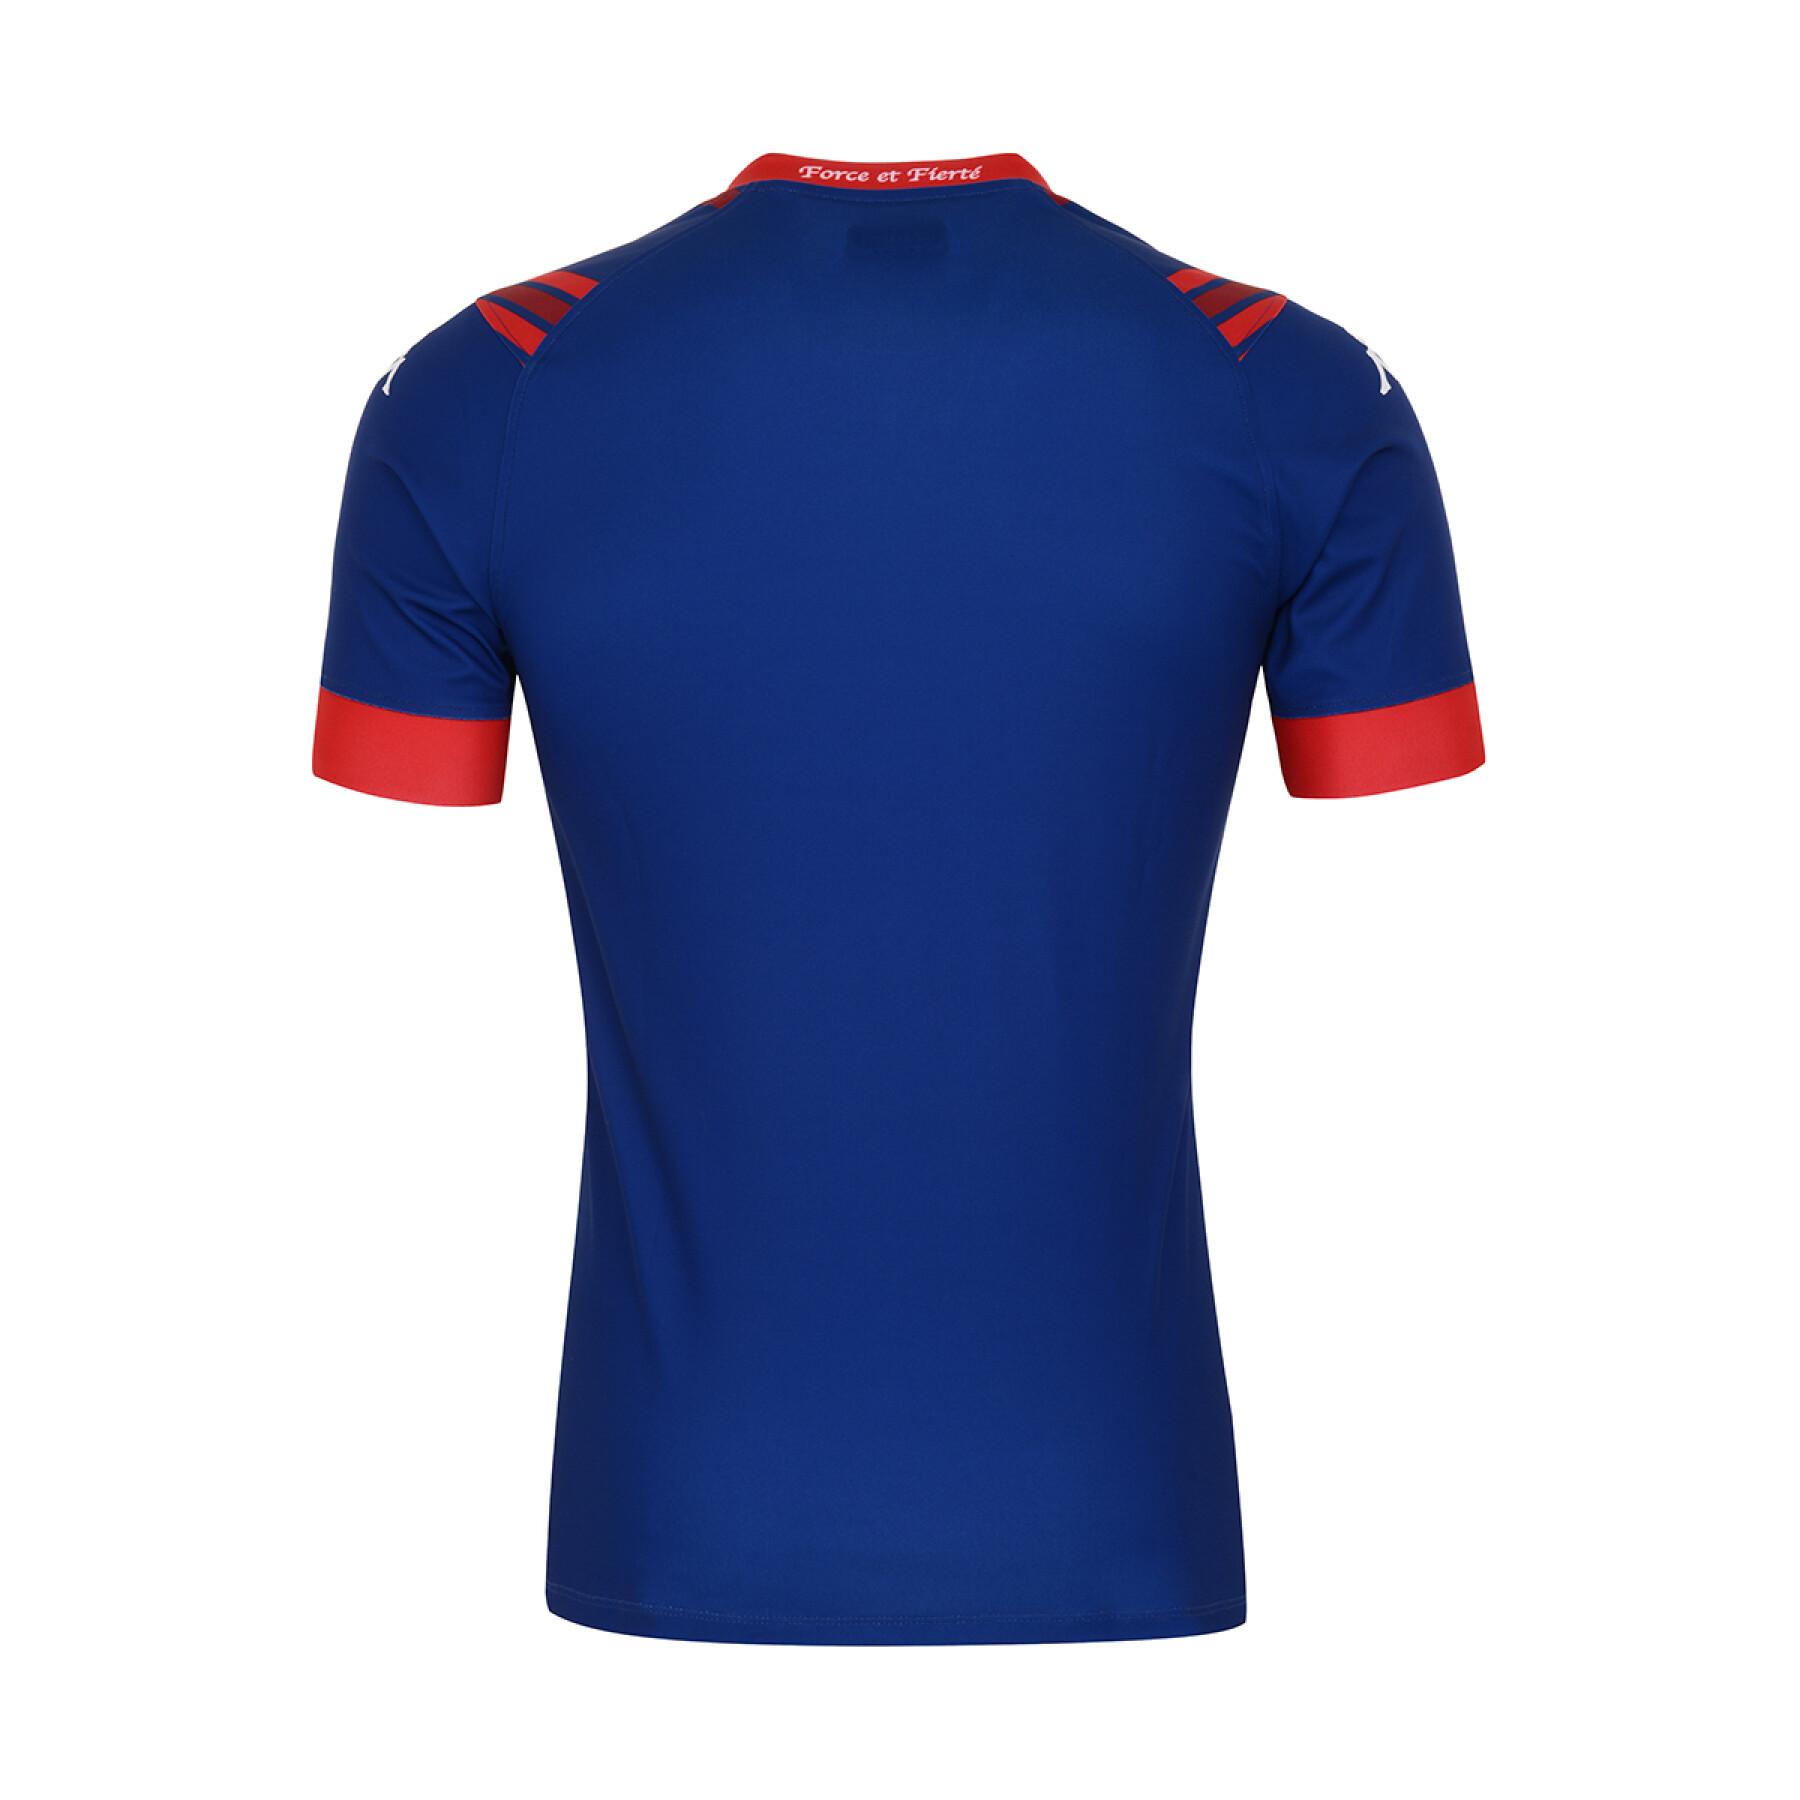 Koszulka domowa FC Grenoble Rugby 2020/21